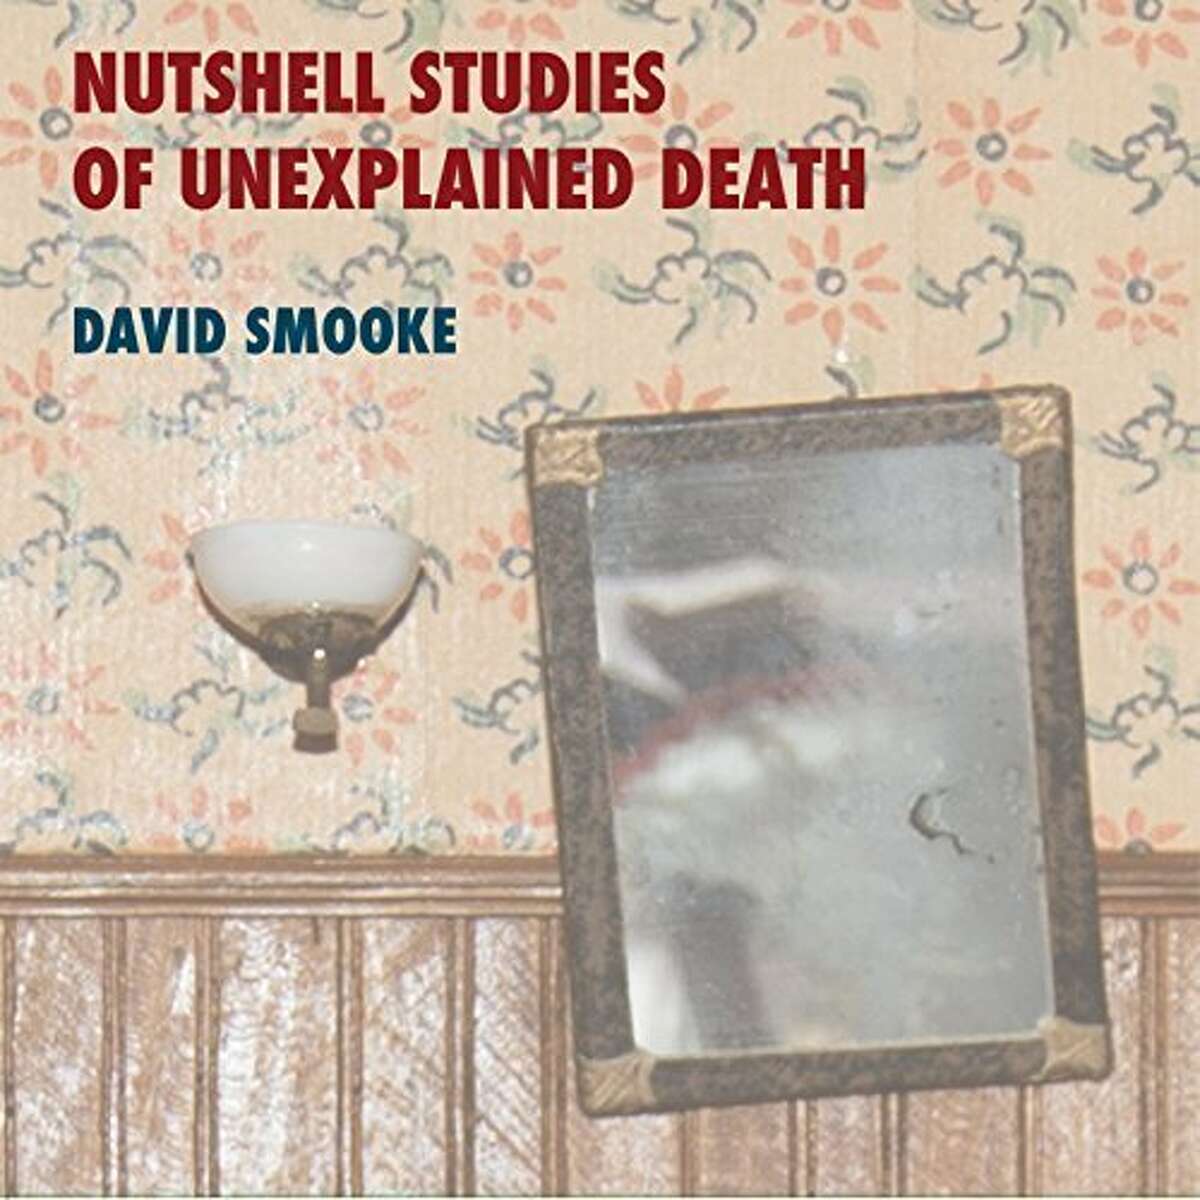 David Smooke, "Nutshell Studies of Unexplained Death"